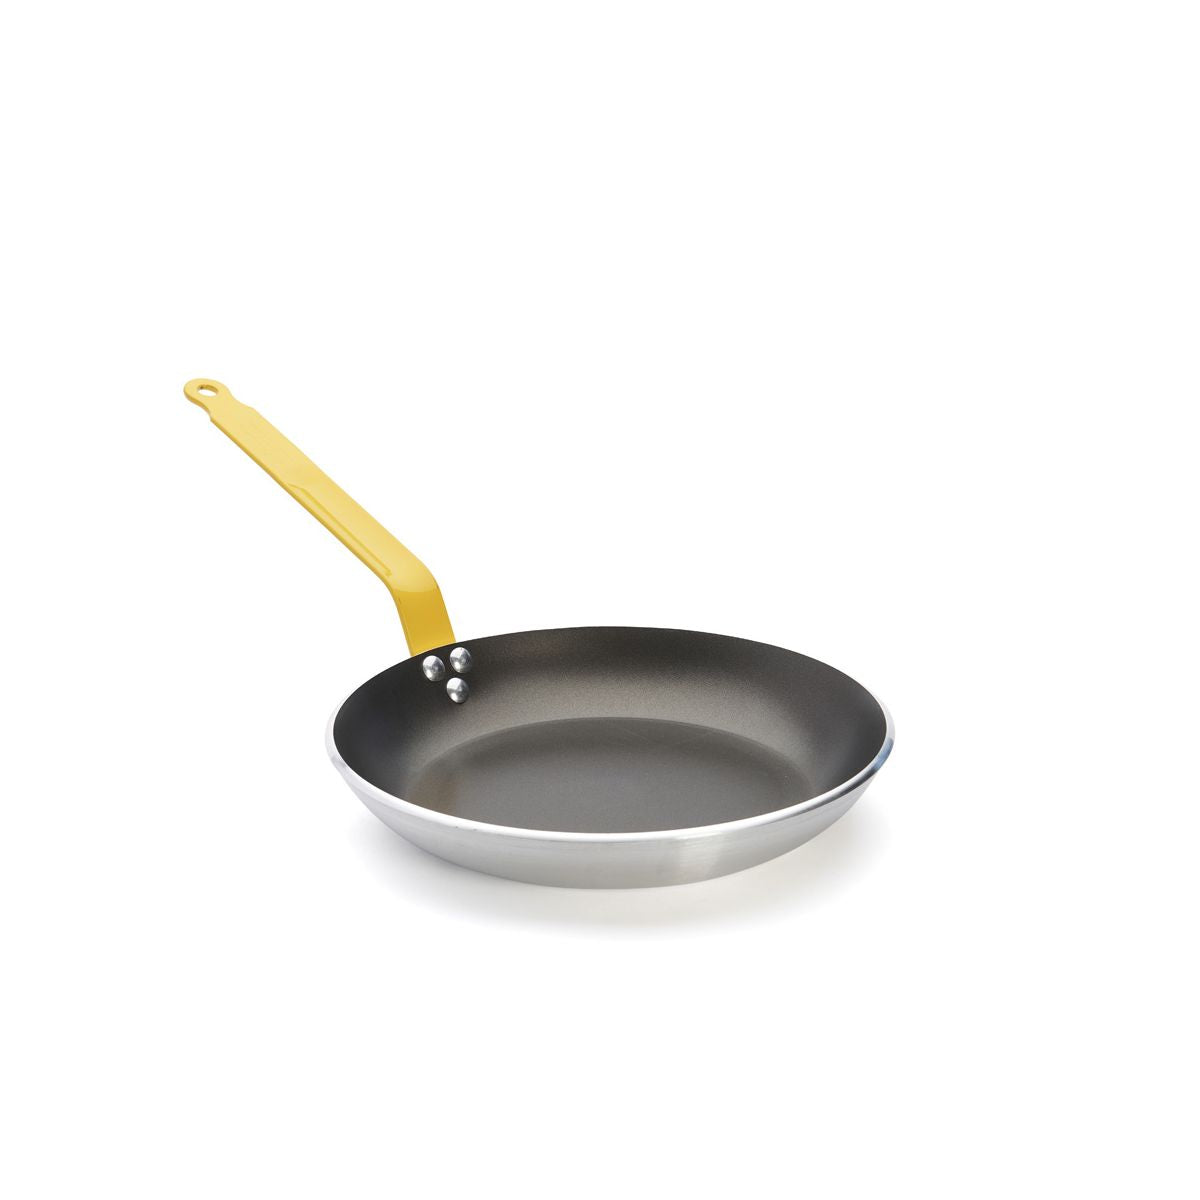 De Buyer Choc frying pan, non-stick, yellow handle